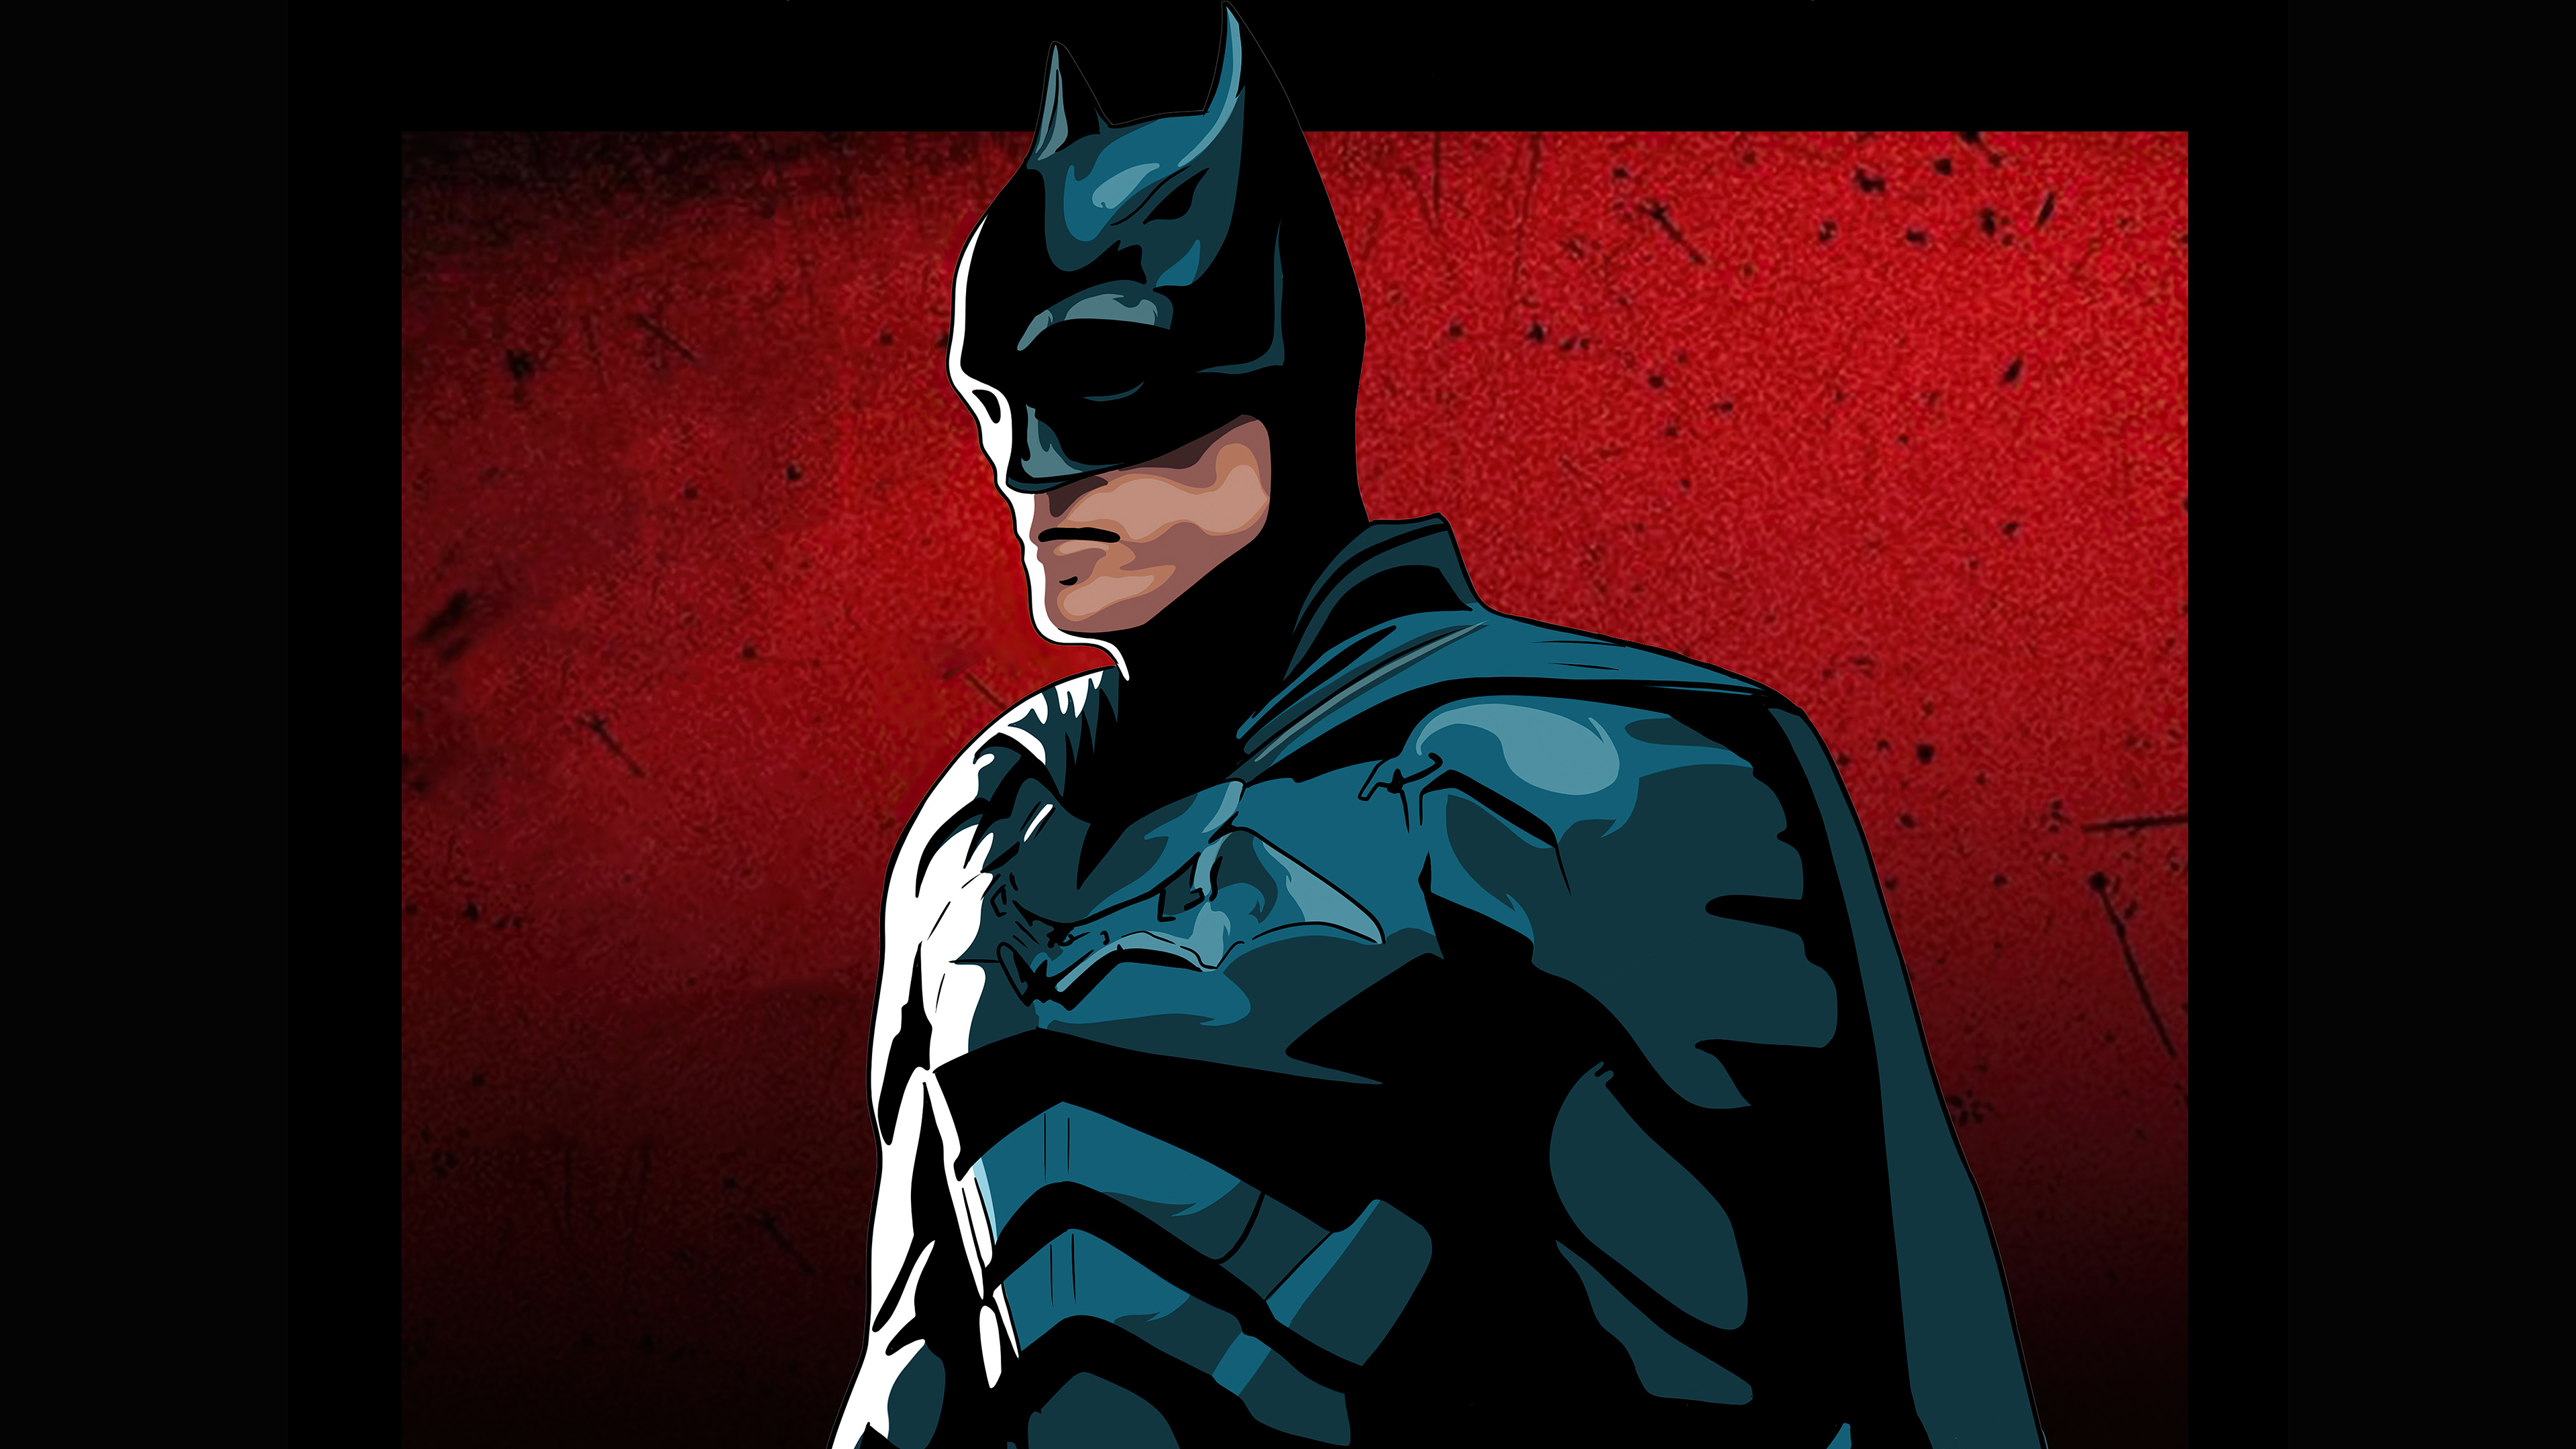 The Batman Cartoon Art Wallpapers